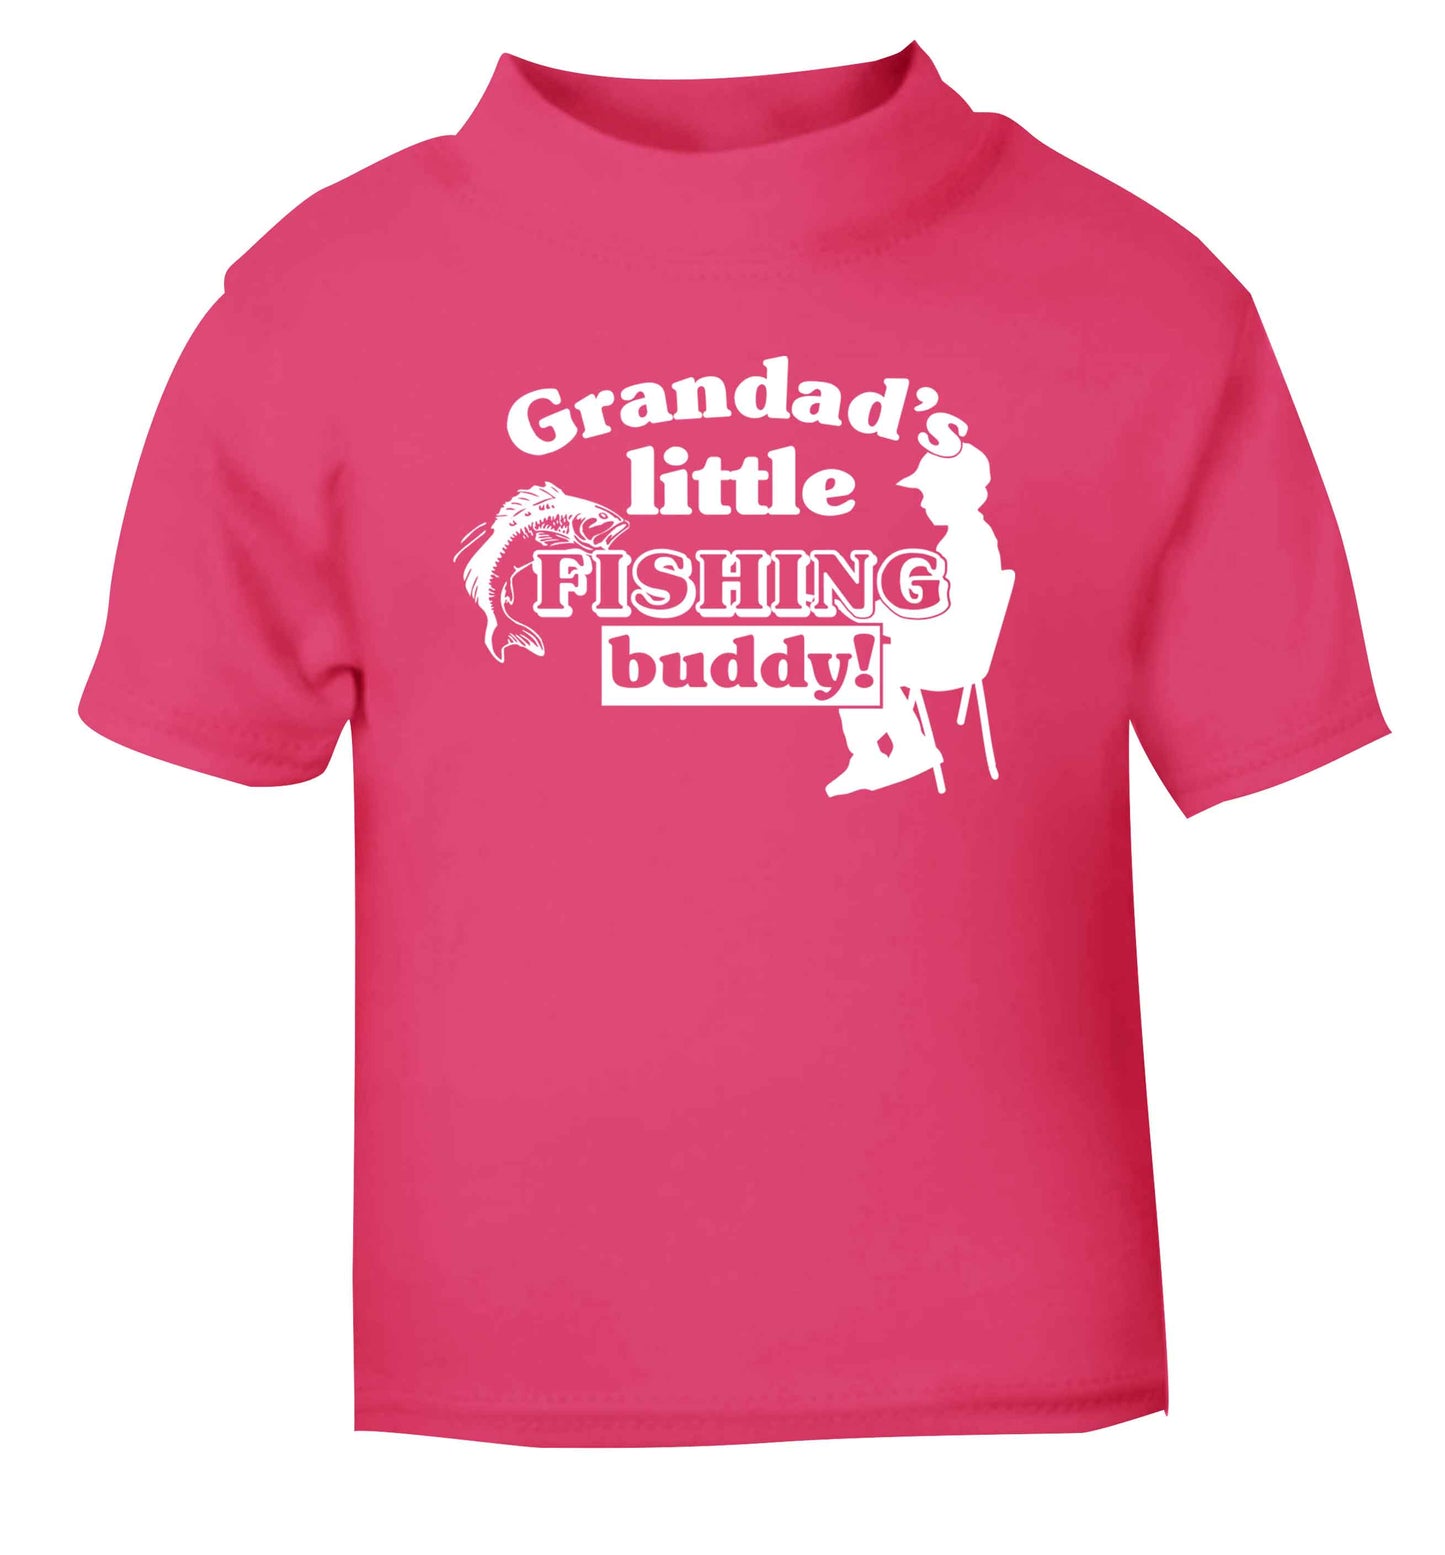 Grandad's little fishing buddy! pink Baby Toddler Tshirt 2 Years